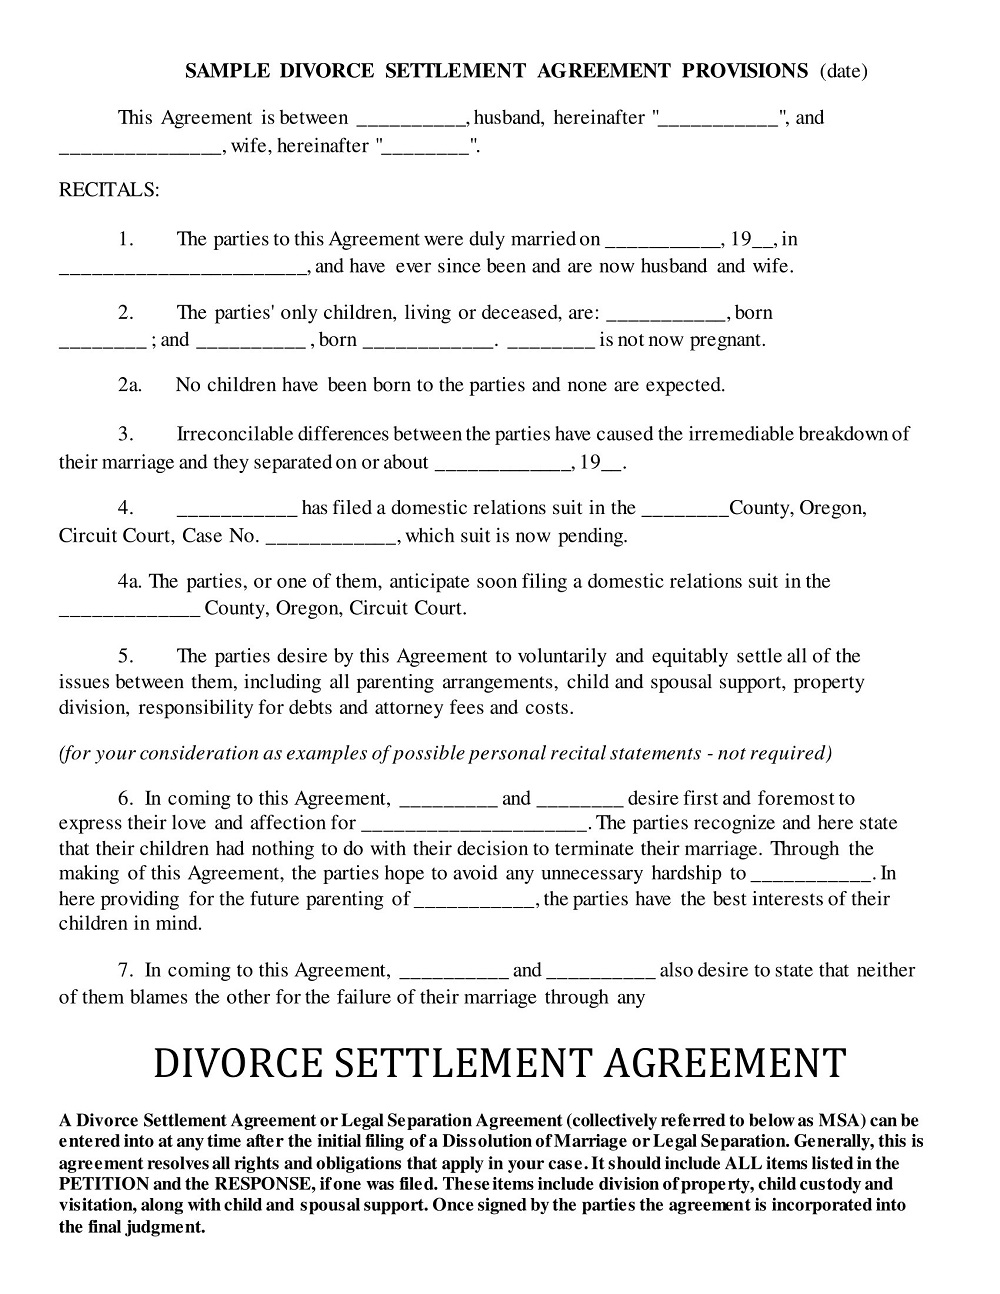 Divorce Settlement Agreement Provisions